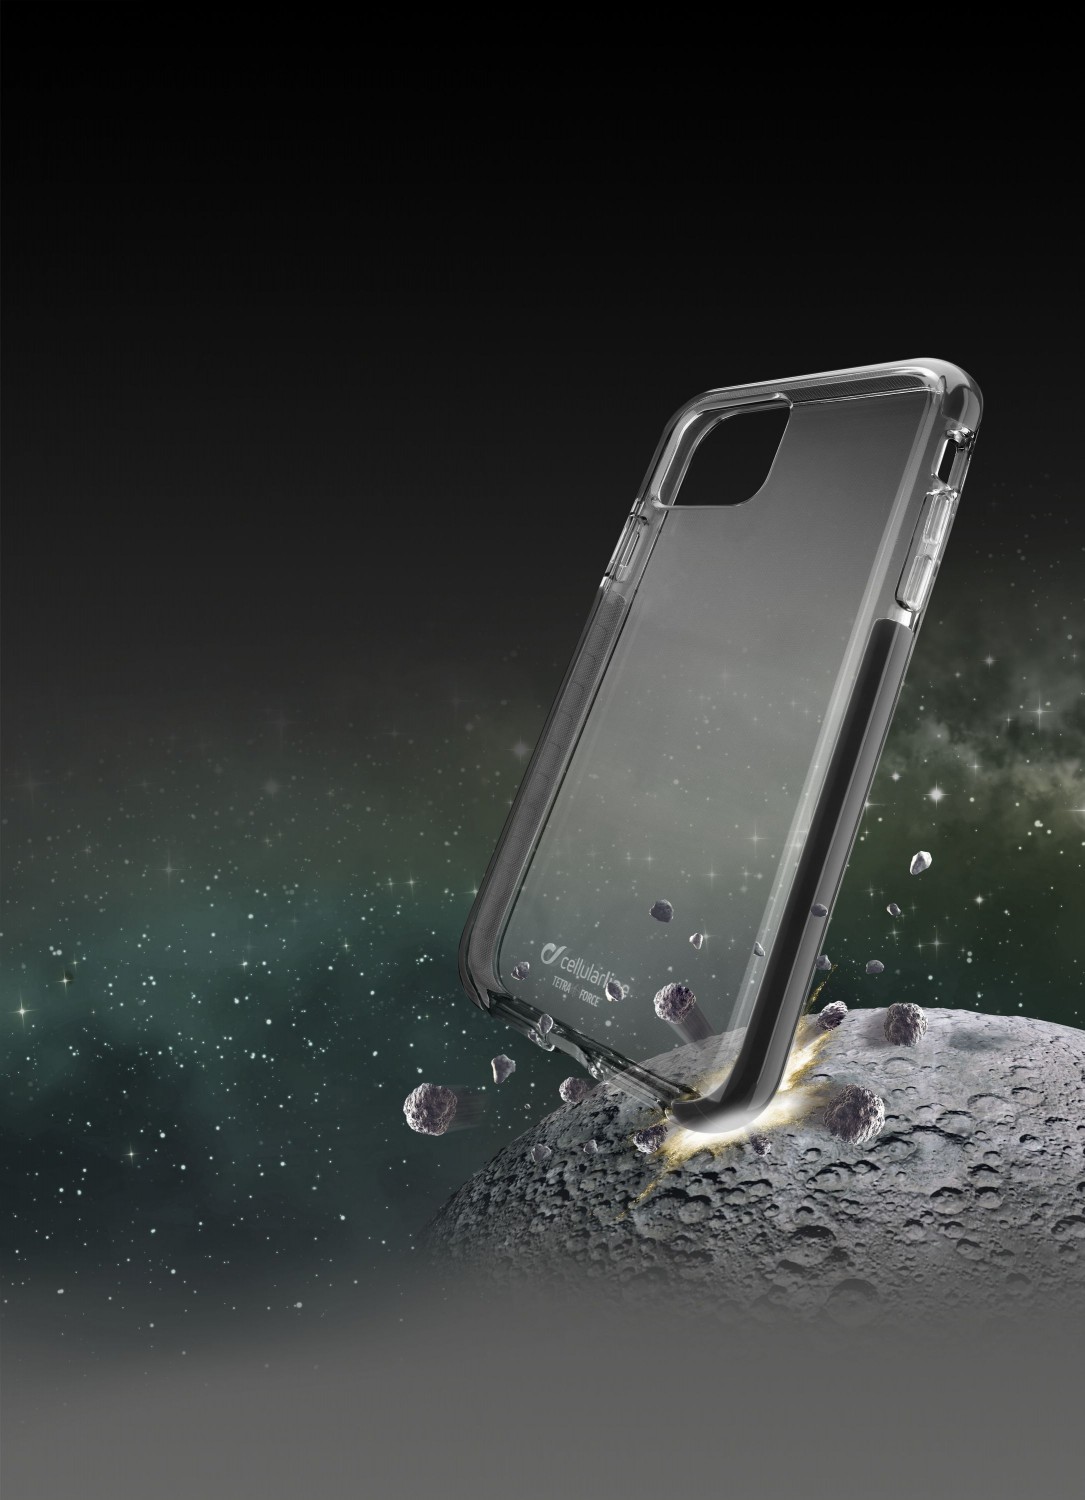 Puzdro CellularLine Tetra Force Shock-Twist pre Apple iPhone 11 Pro, transparentná